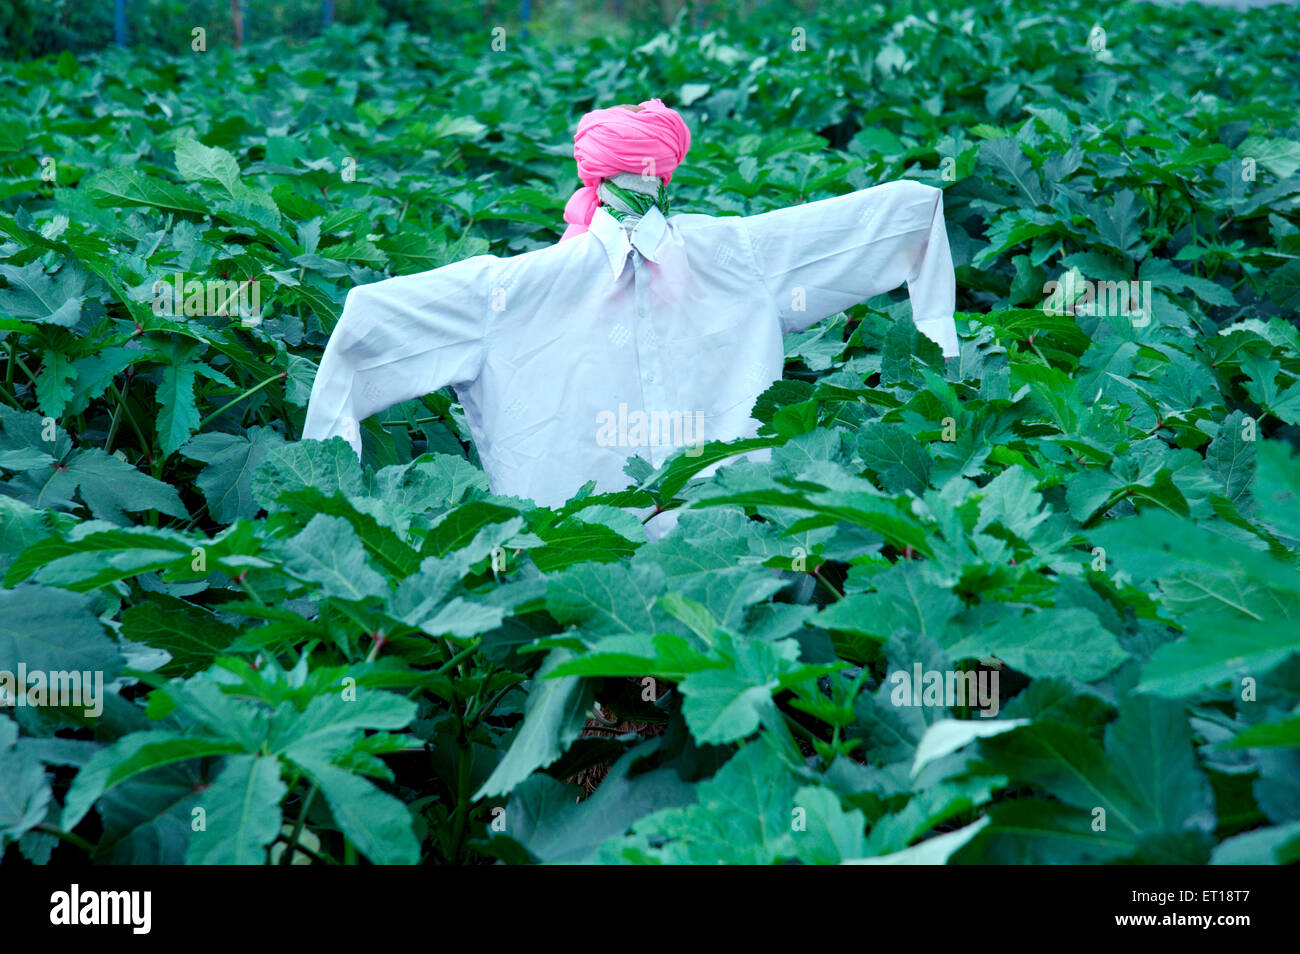 Humanoid scarecrow , scarecrow in field, decoy, mannequin, white shirt, pink turban, India Stock Photo